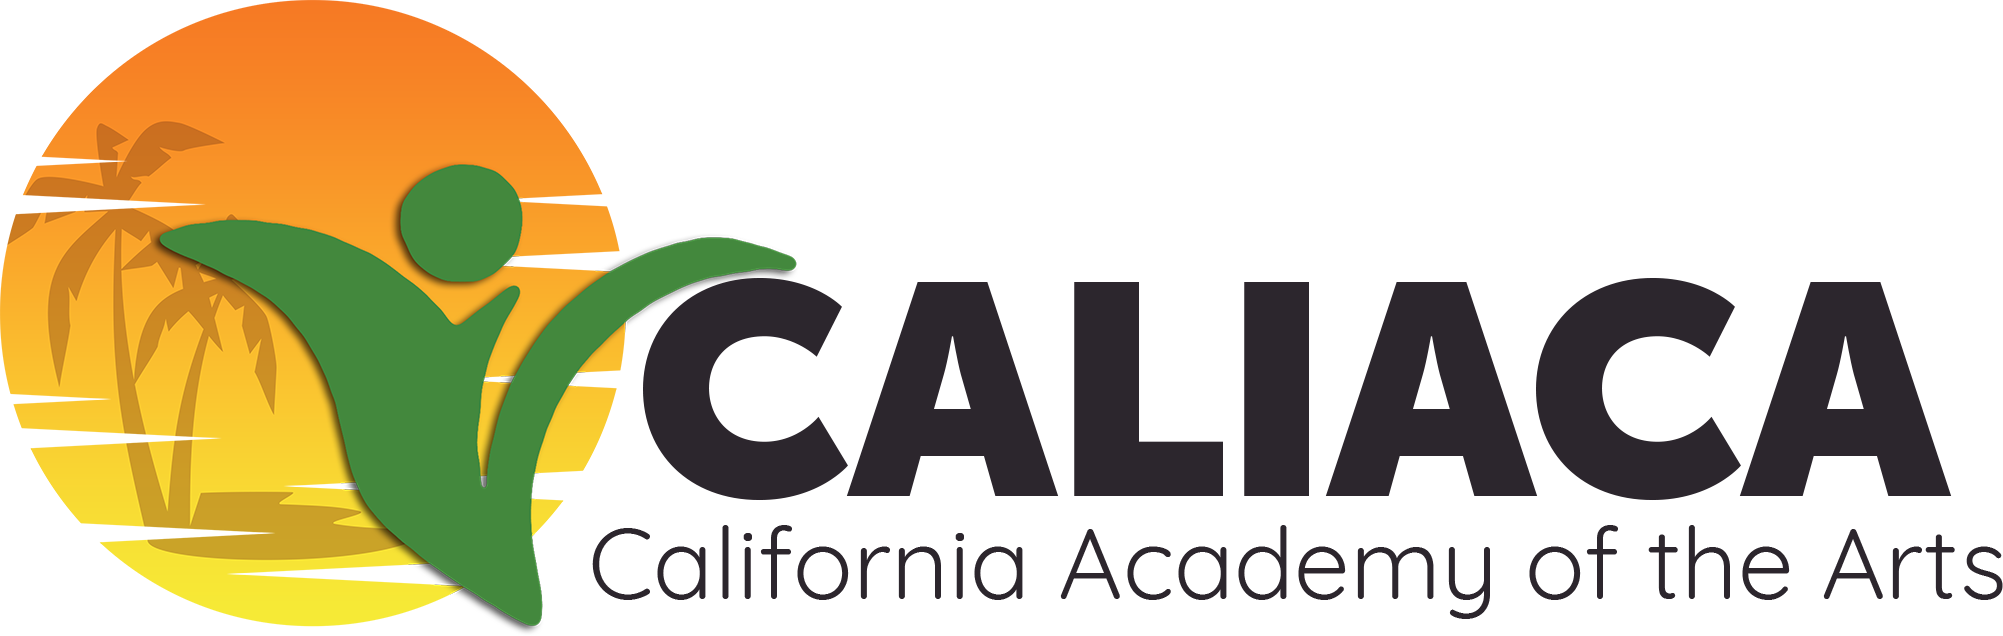 Logo - California Academy of the Arts (CALIACA)